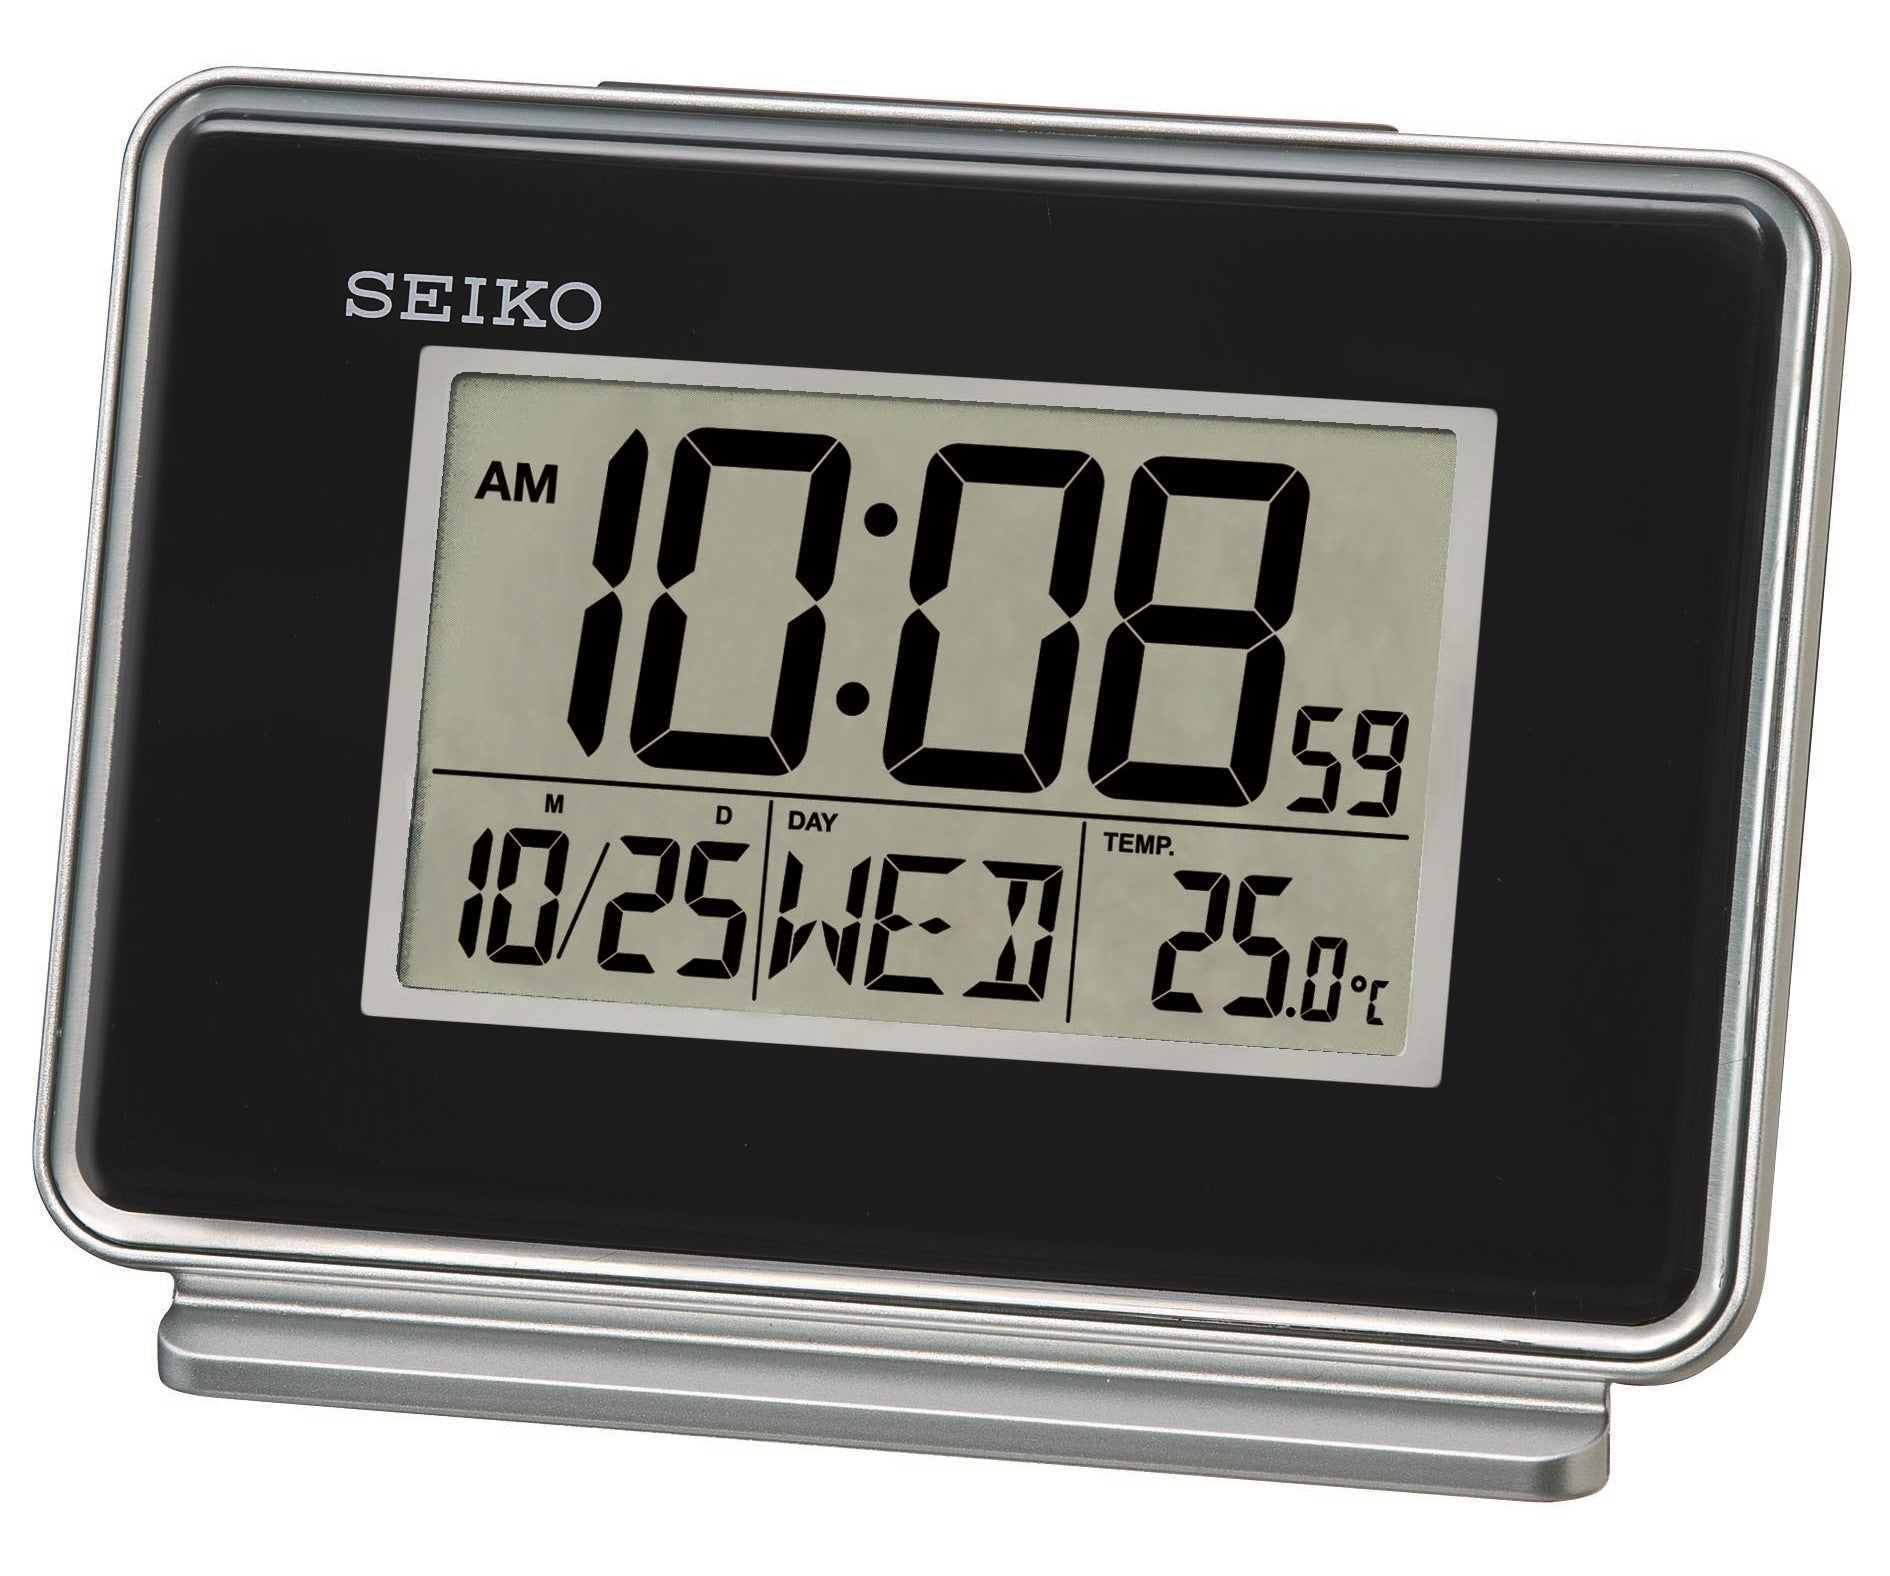 Seiko LCD Dual Alarm/Calendar Clock